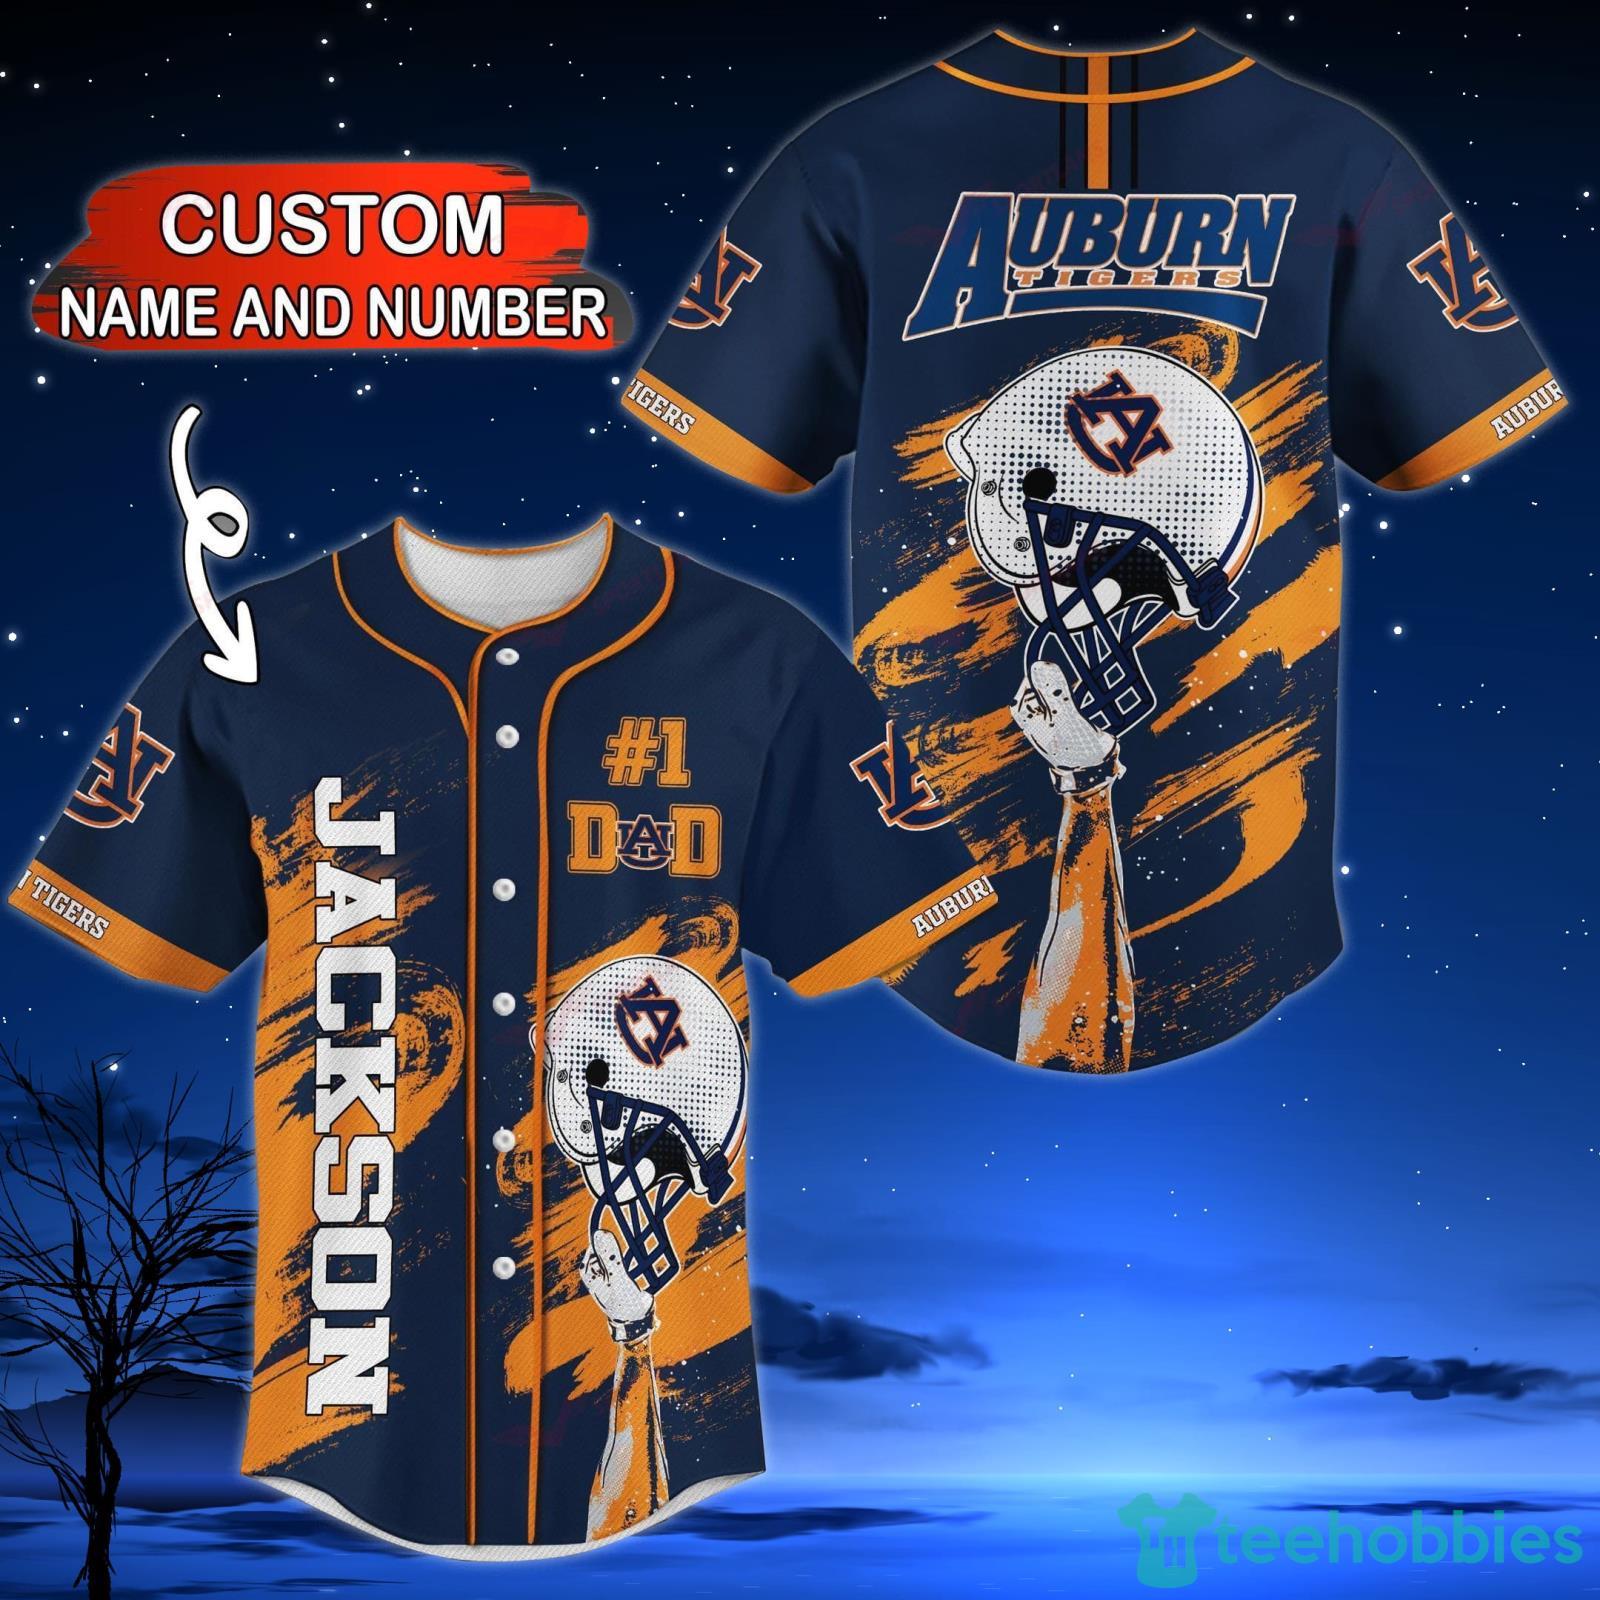 Tigers Softball custom jersey created by Garb Athletics! 🥎🐅  #garbathletics #customjersey